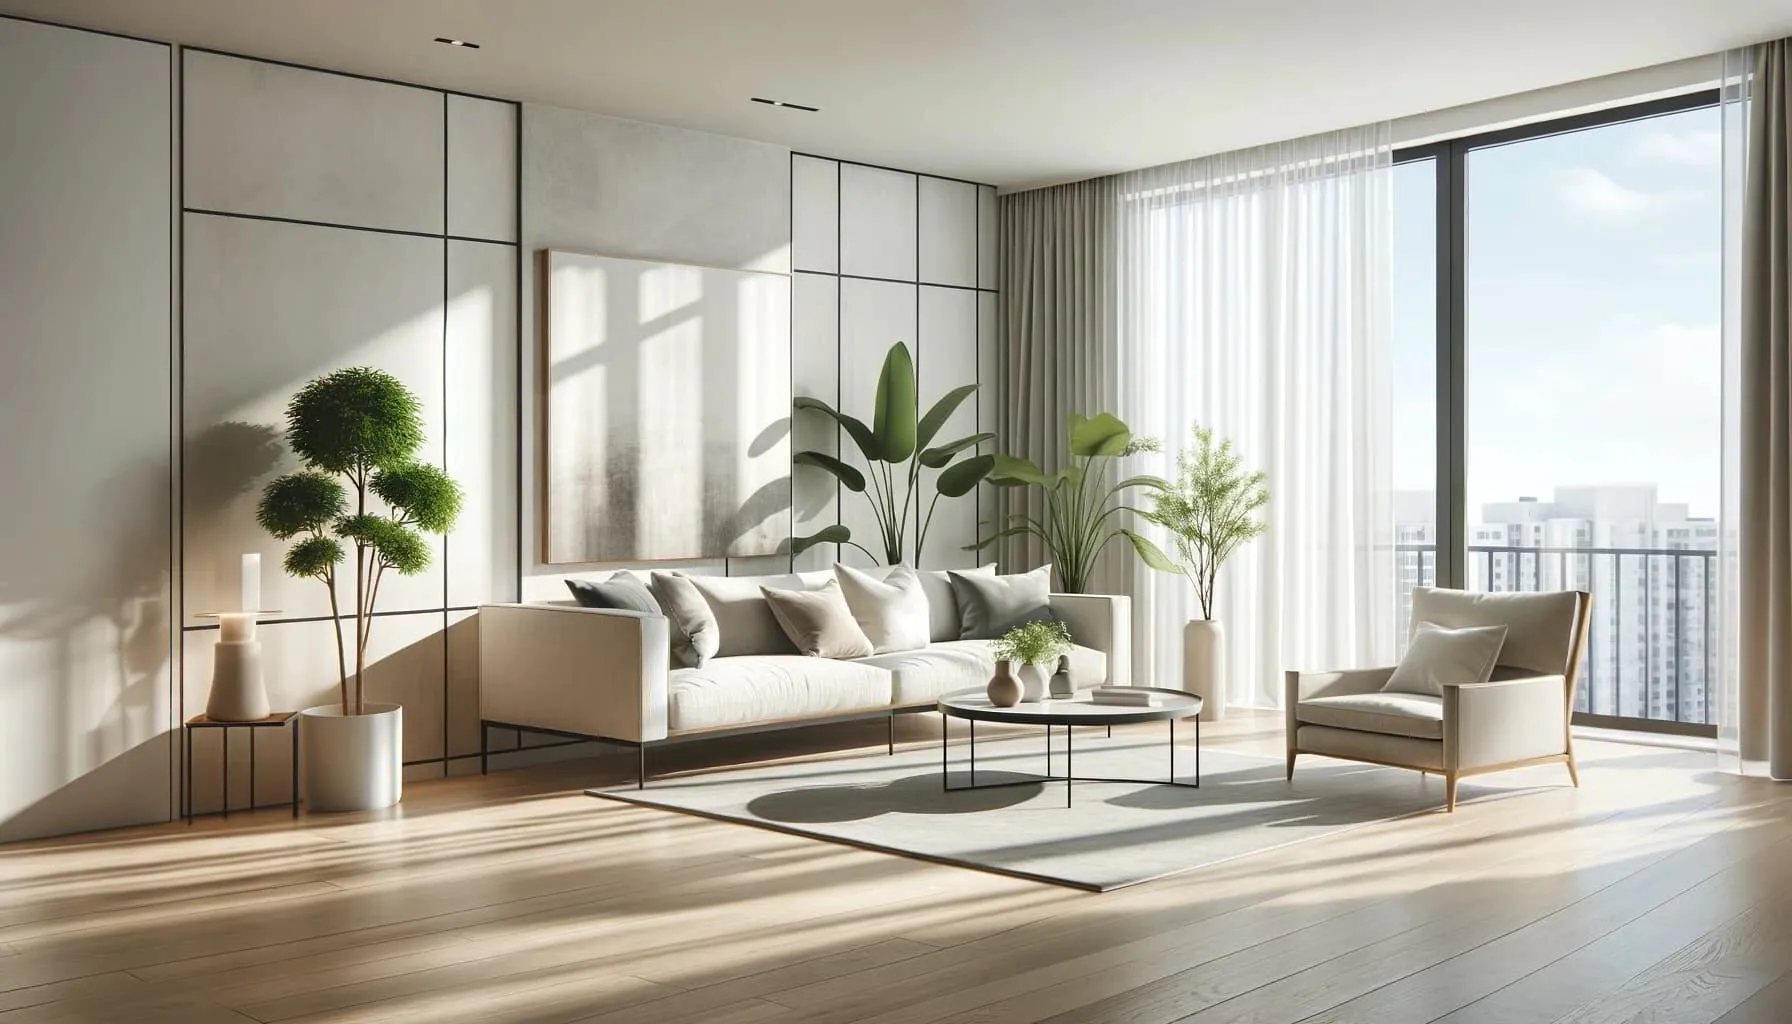 A modern Scandinavian-style living room with a minimalist design